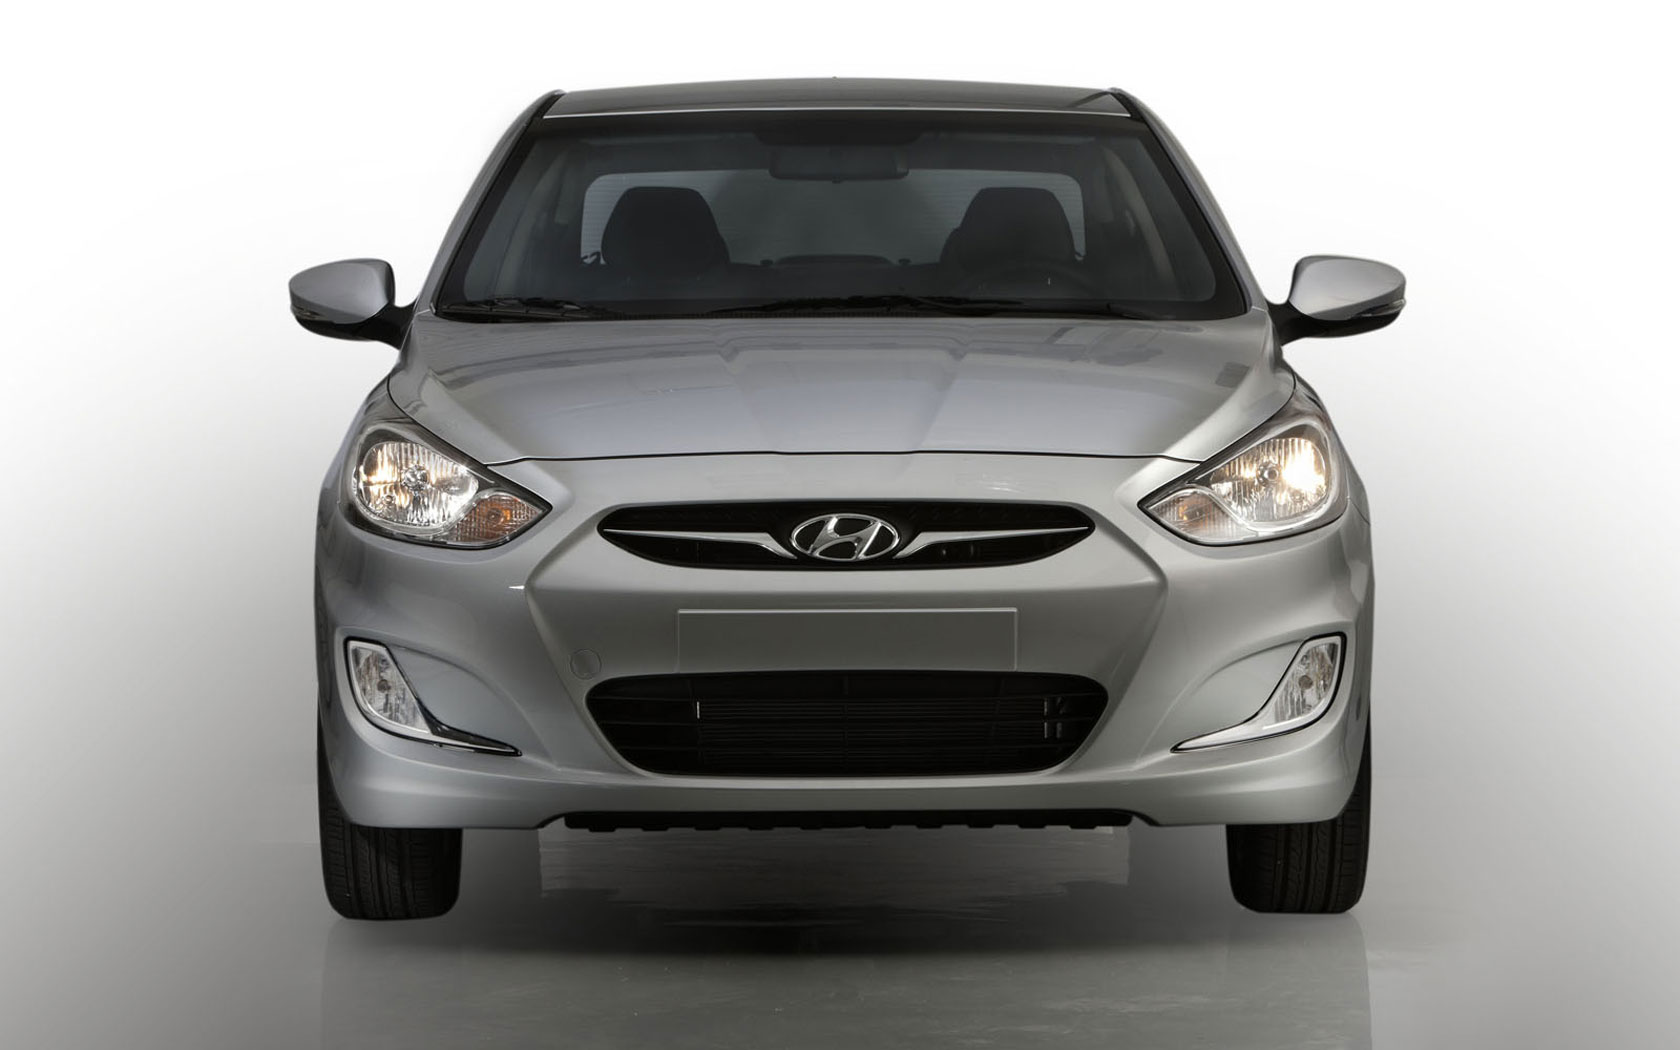  Hyundai Solaris (2011-2014)